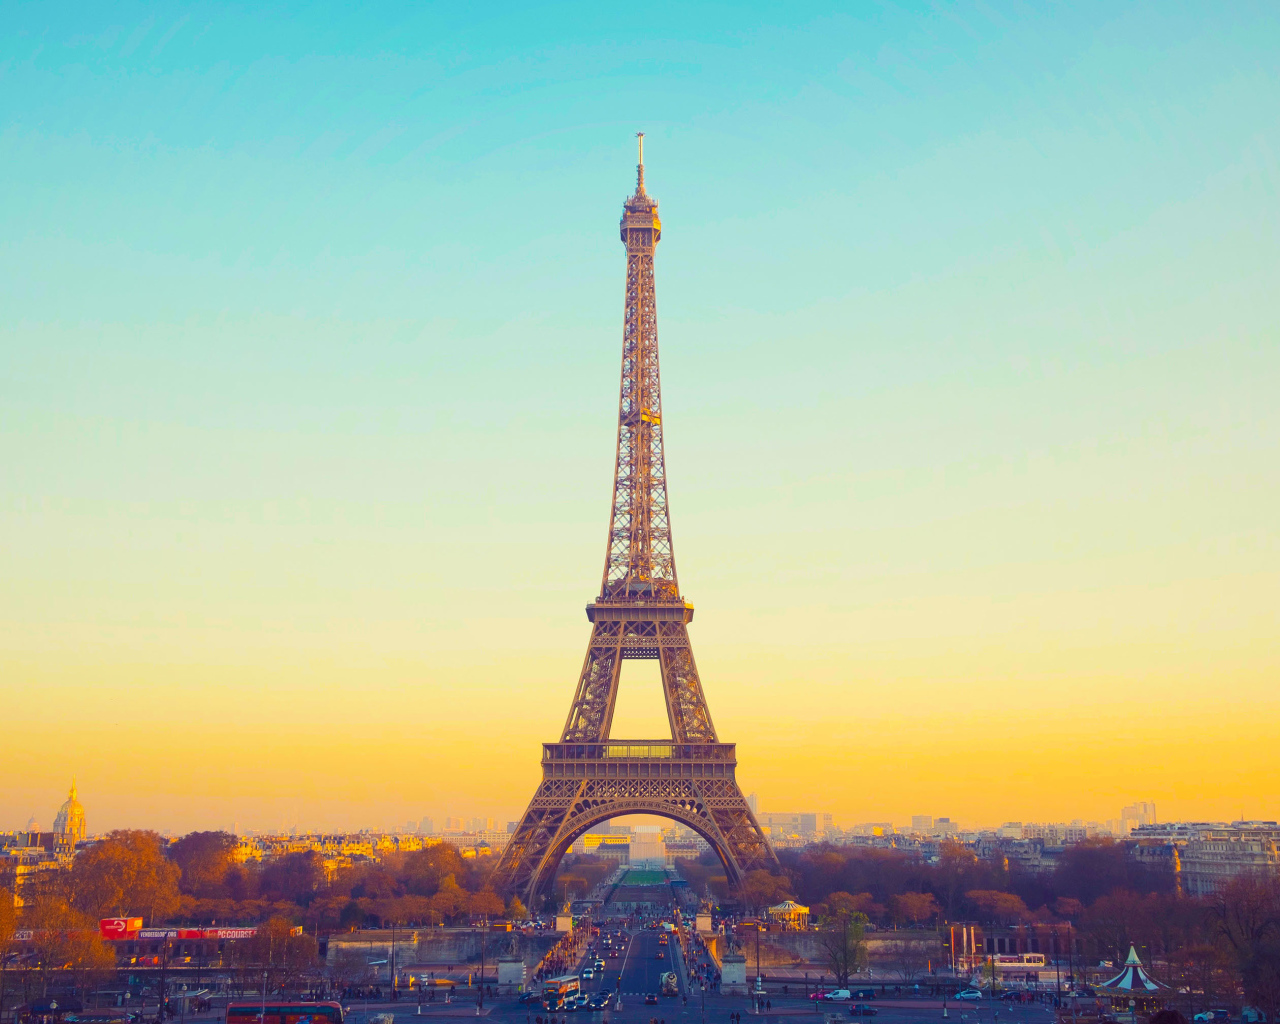 Эйфелева башня на фоне красивого голубого неба, Париж. Франция